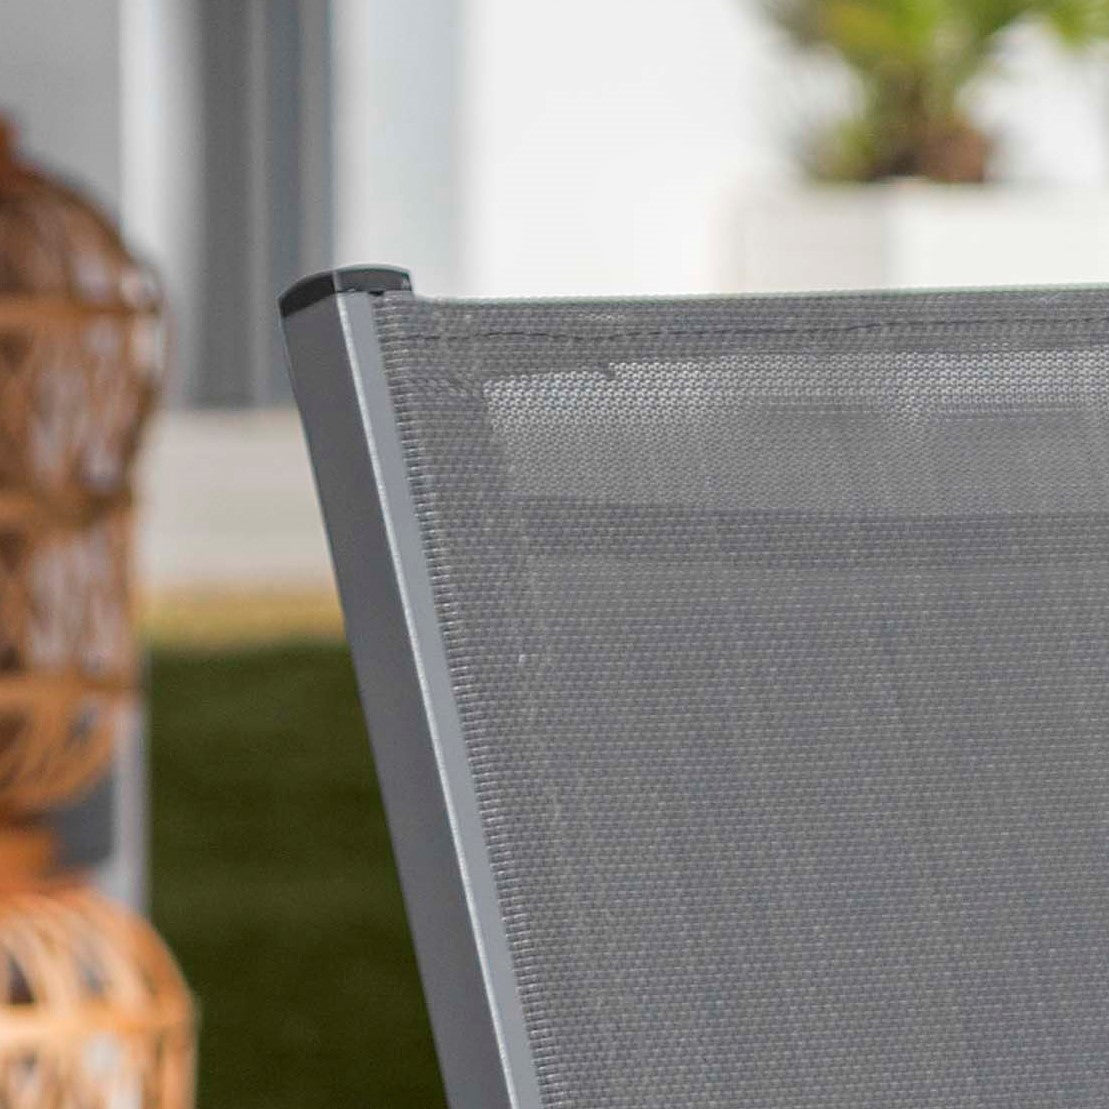 Chaise de jardin alu empilable Murano - Mobellia